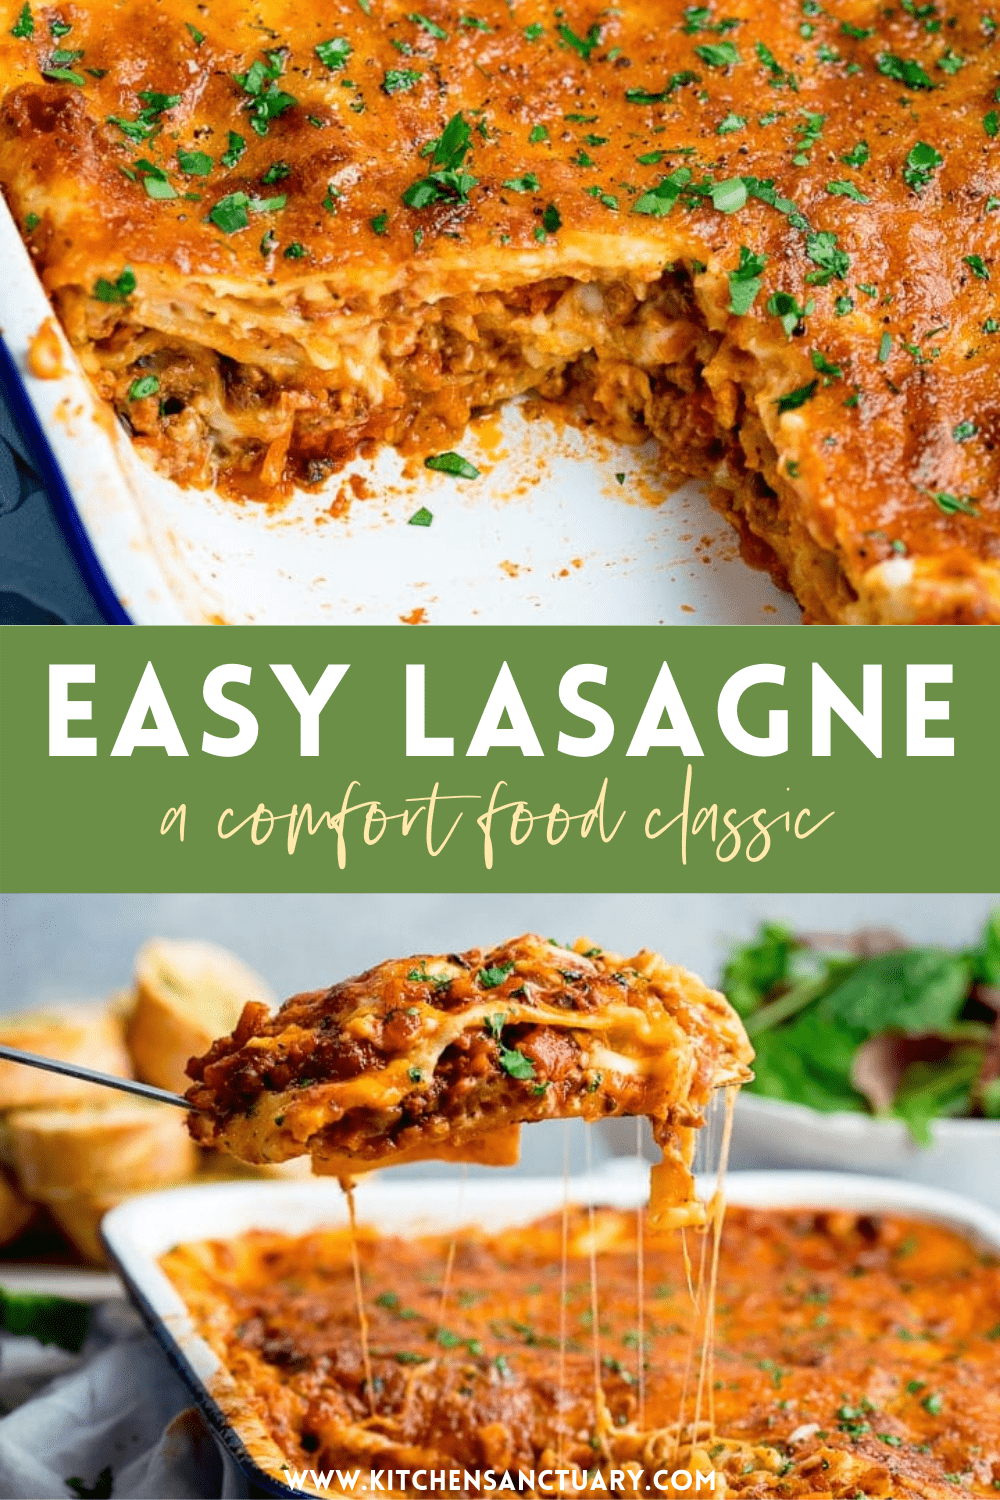 Easy Lasagne Recipe - Nicky's Kitchen Sanctuary